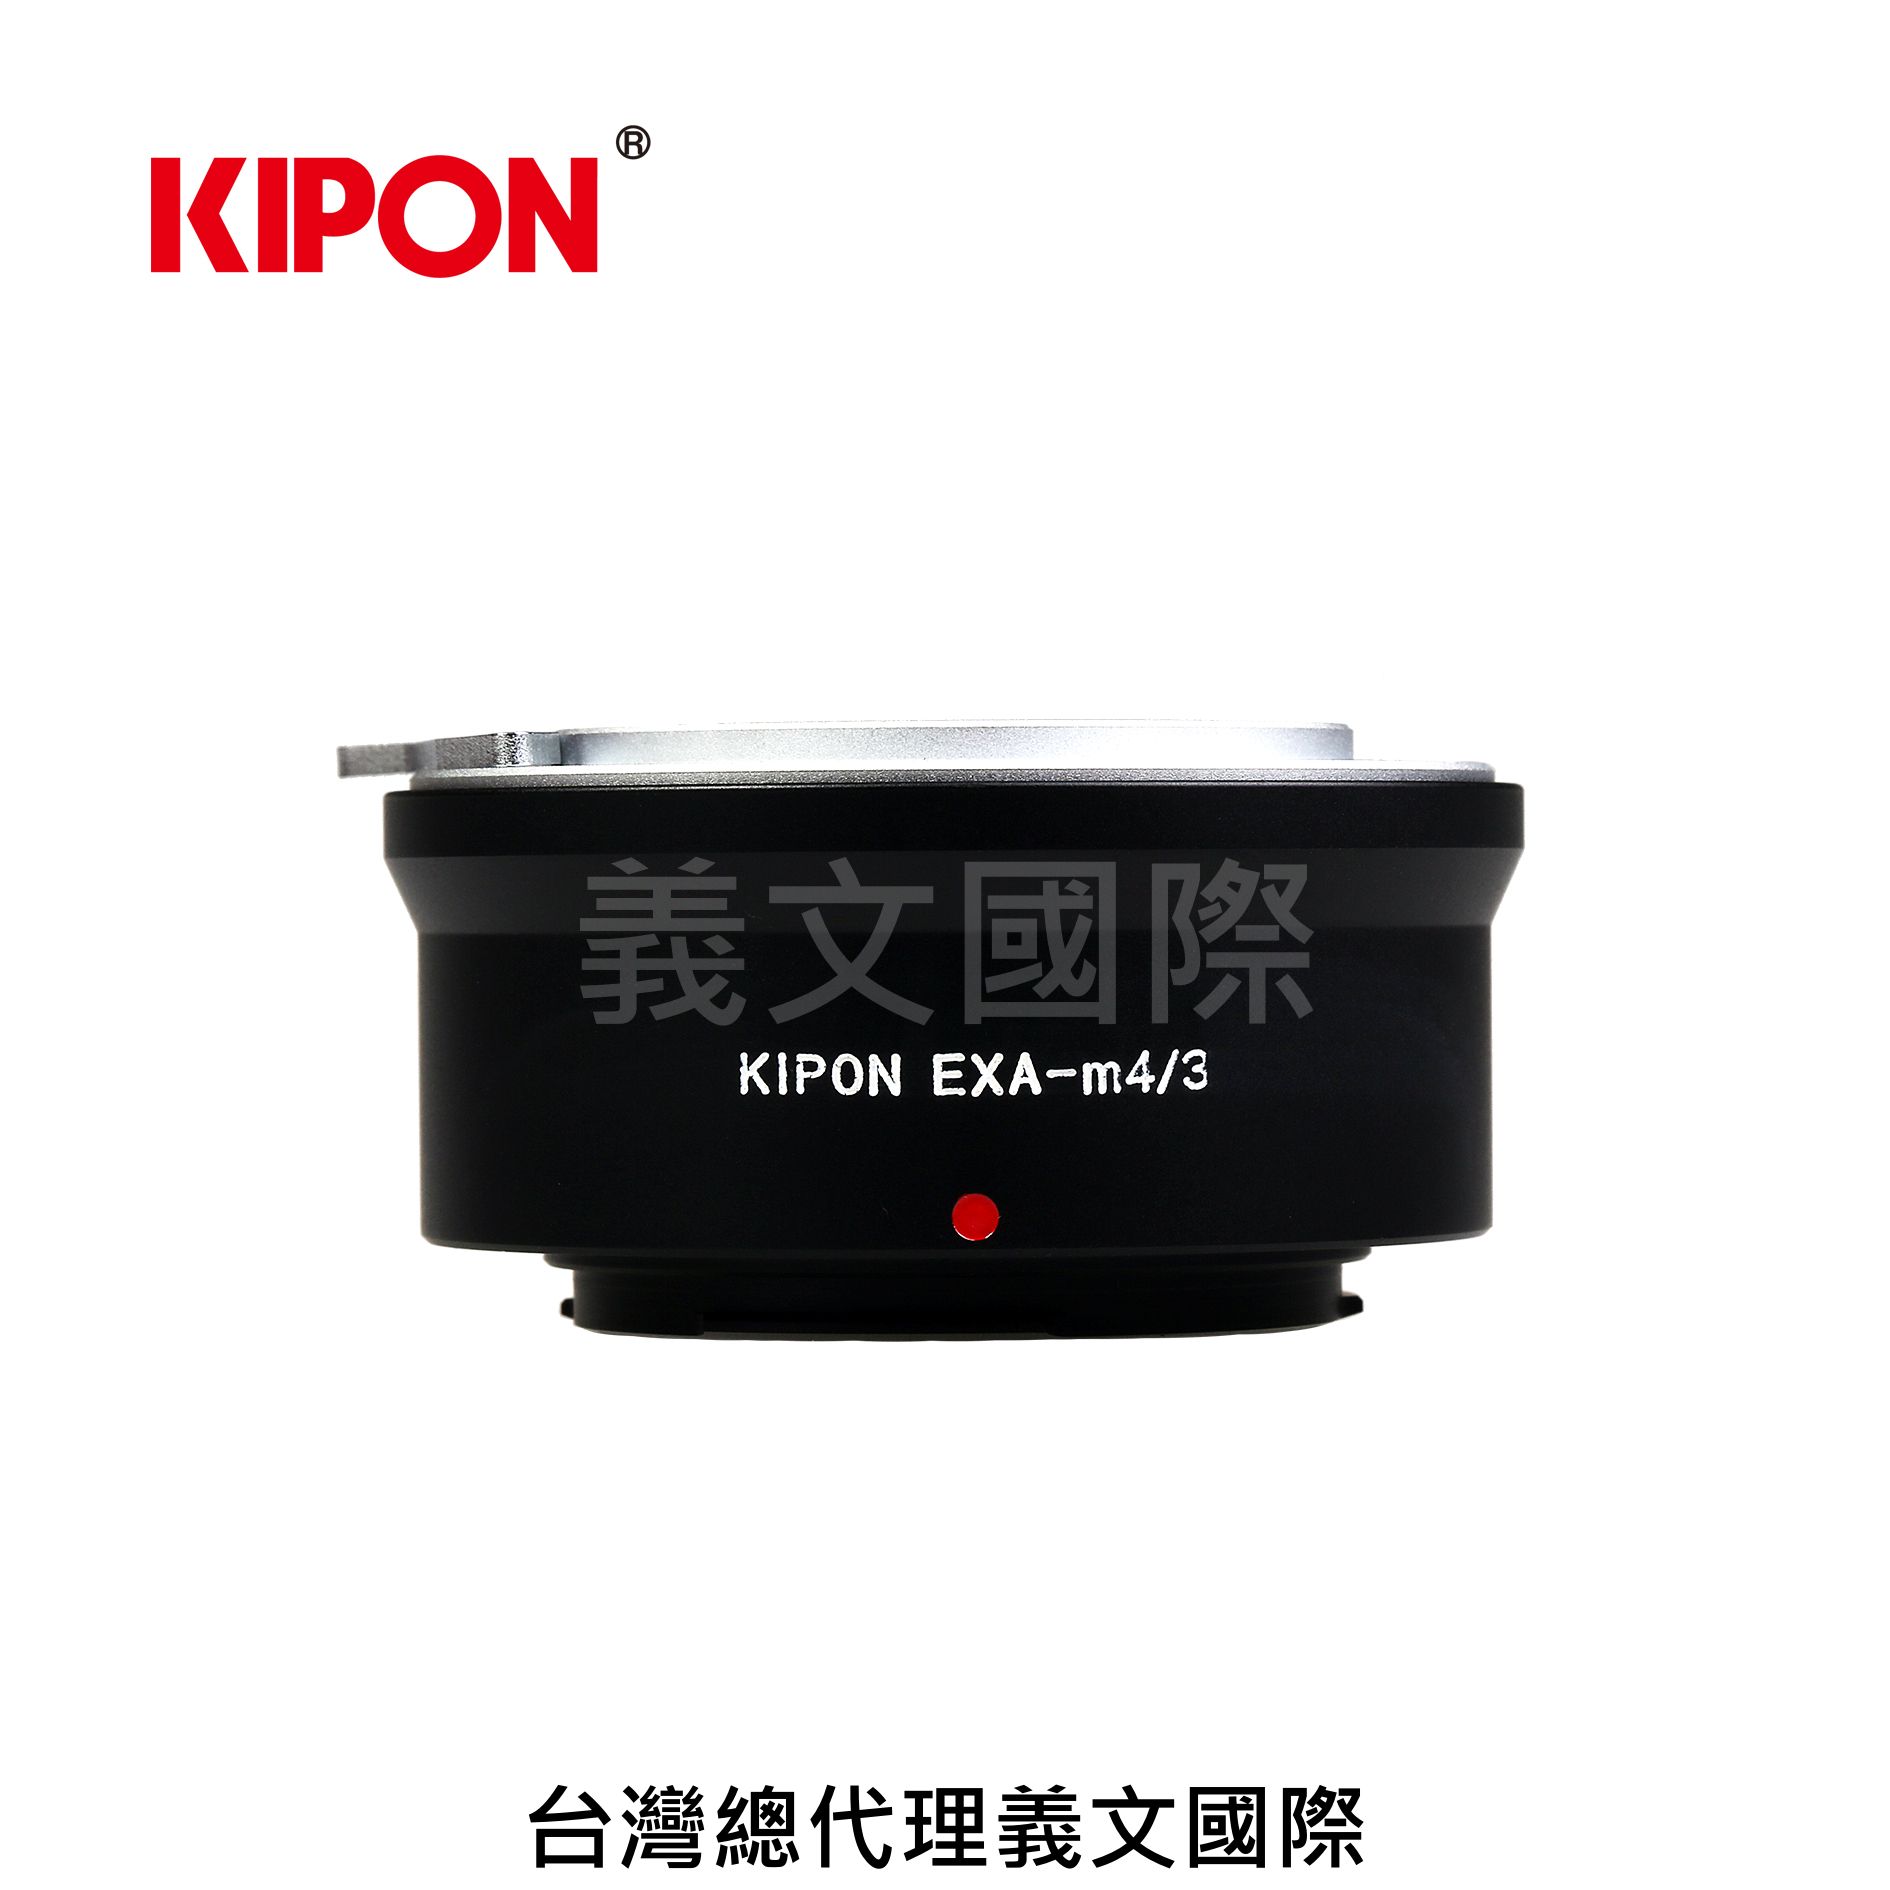 Kipon轉接環專賣店:Exakta-m4/3 (for Panasonic GX7/GX1/G10/GF6/GF5/GF3/GF2/GM1)